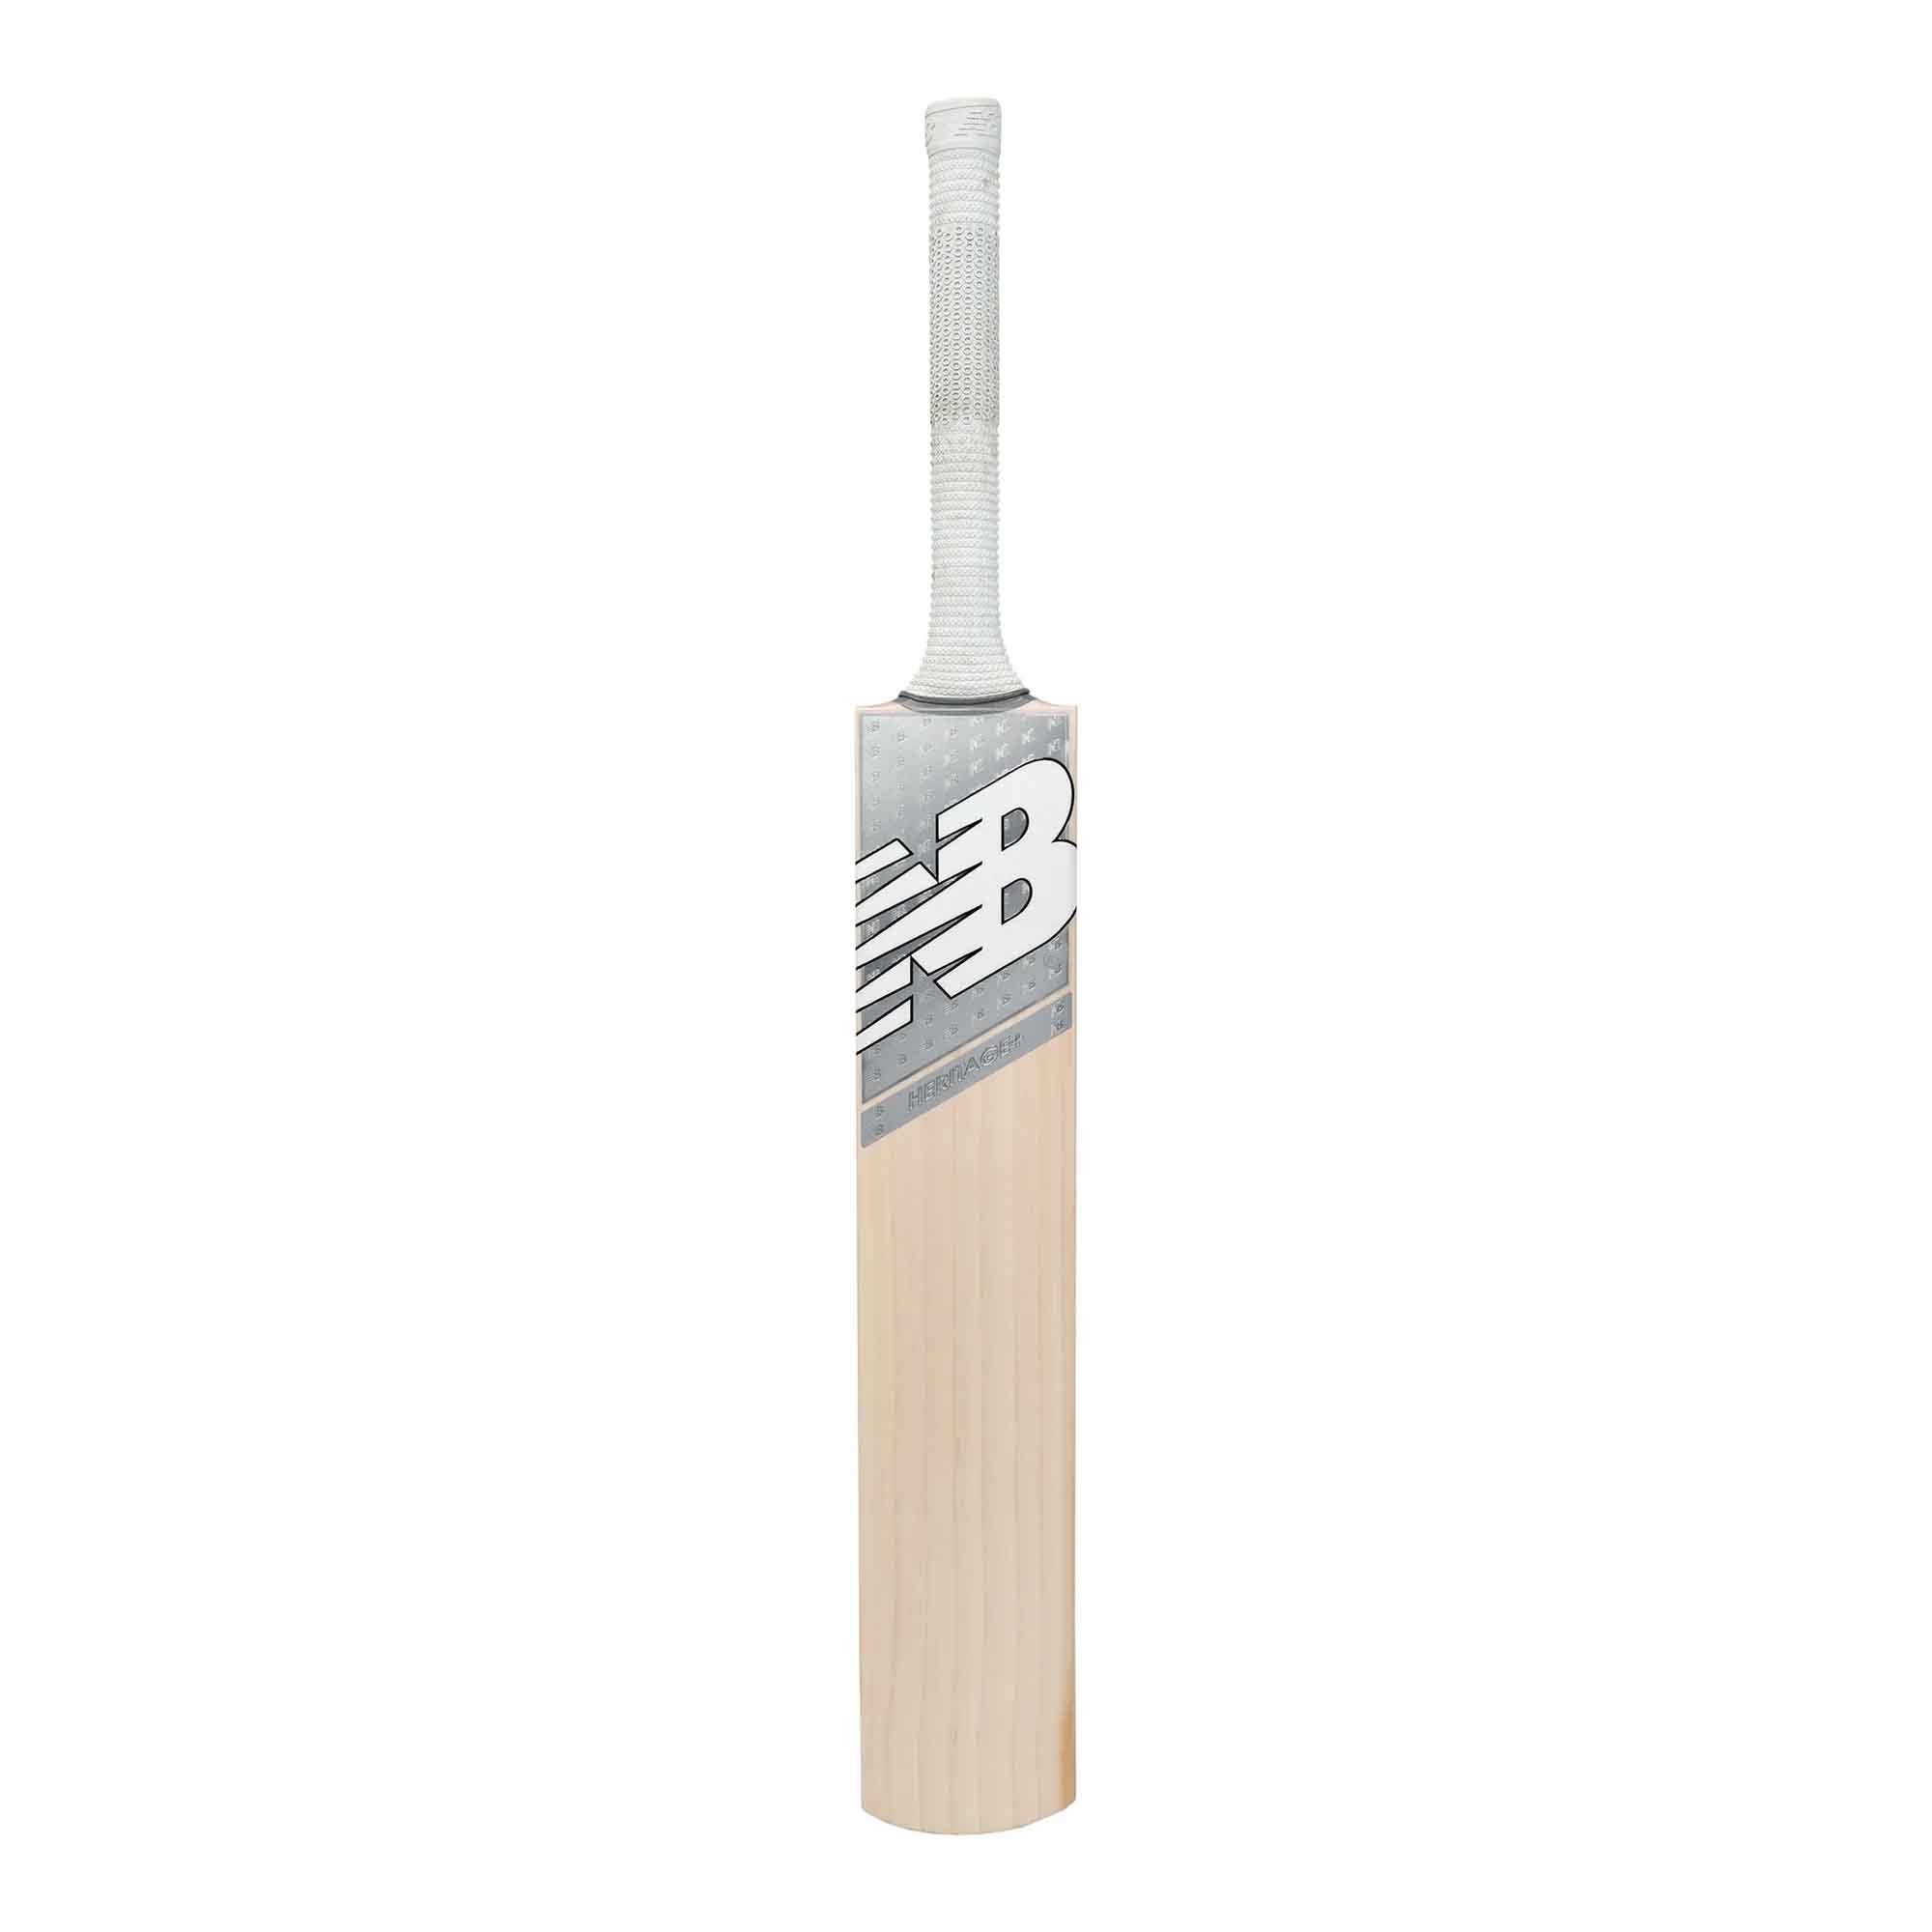 New Balance Heritage Cricket Bat | Shop Online at Stag Sports Australia